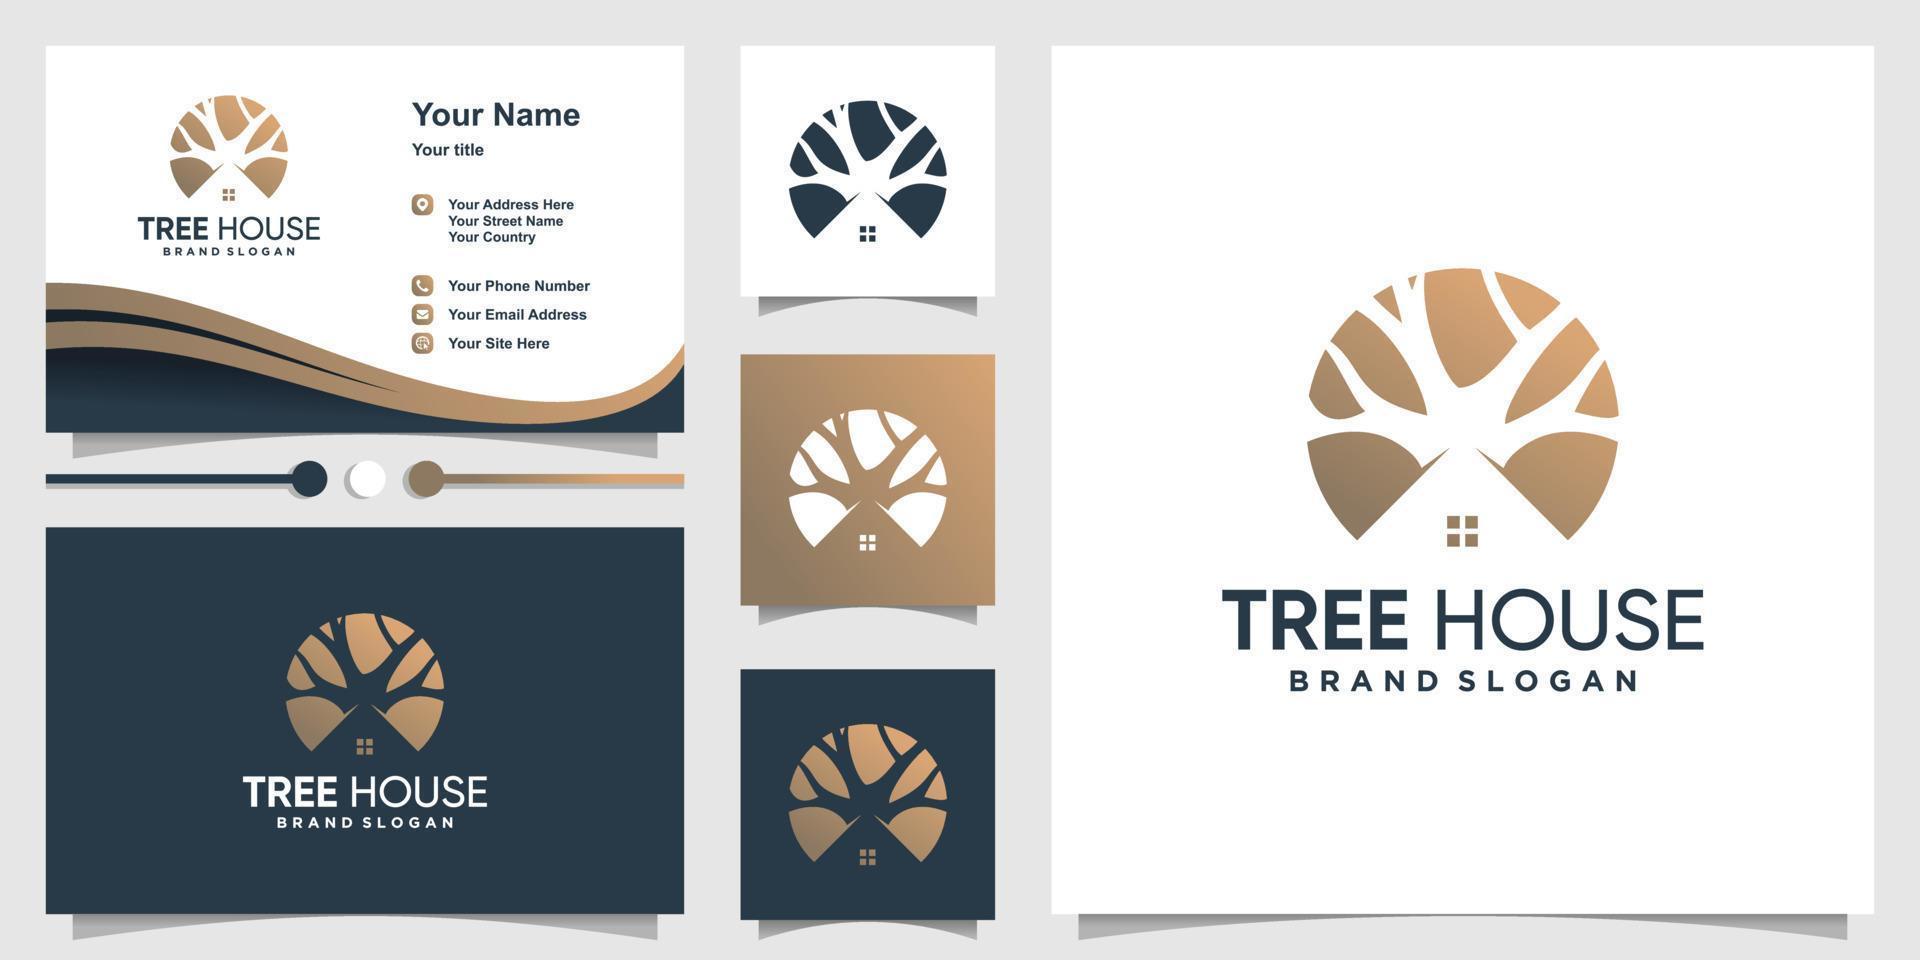 Tree house logo design with creative element concept Premium Vector